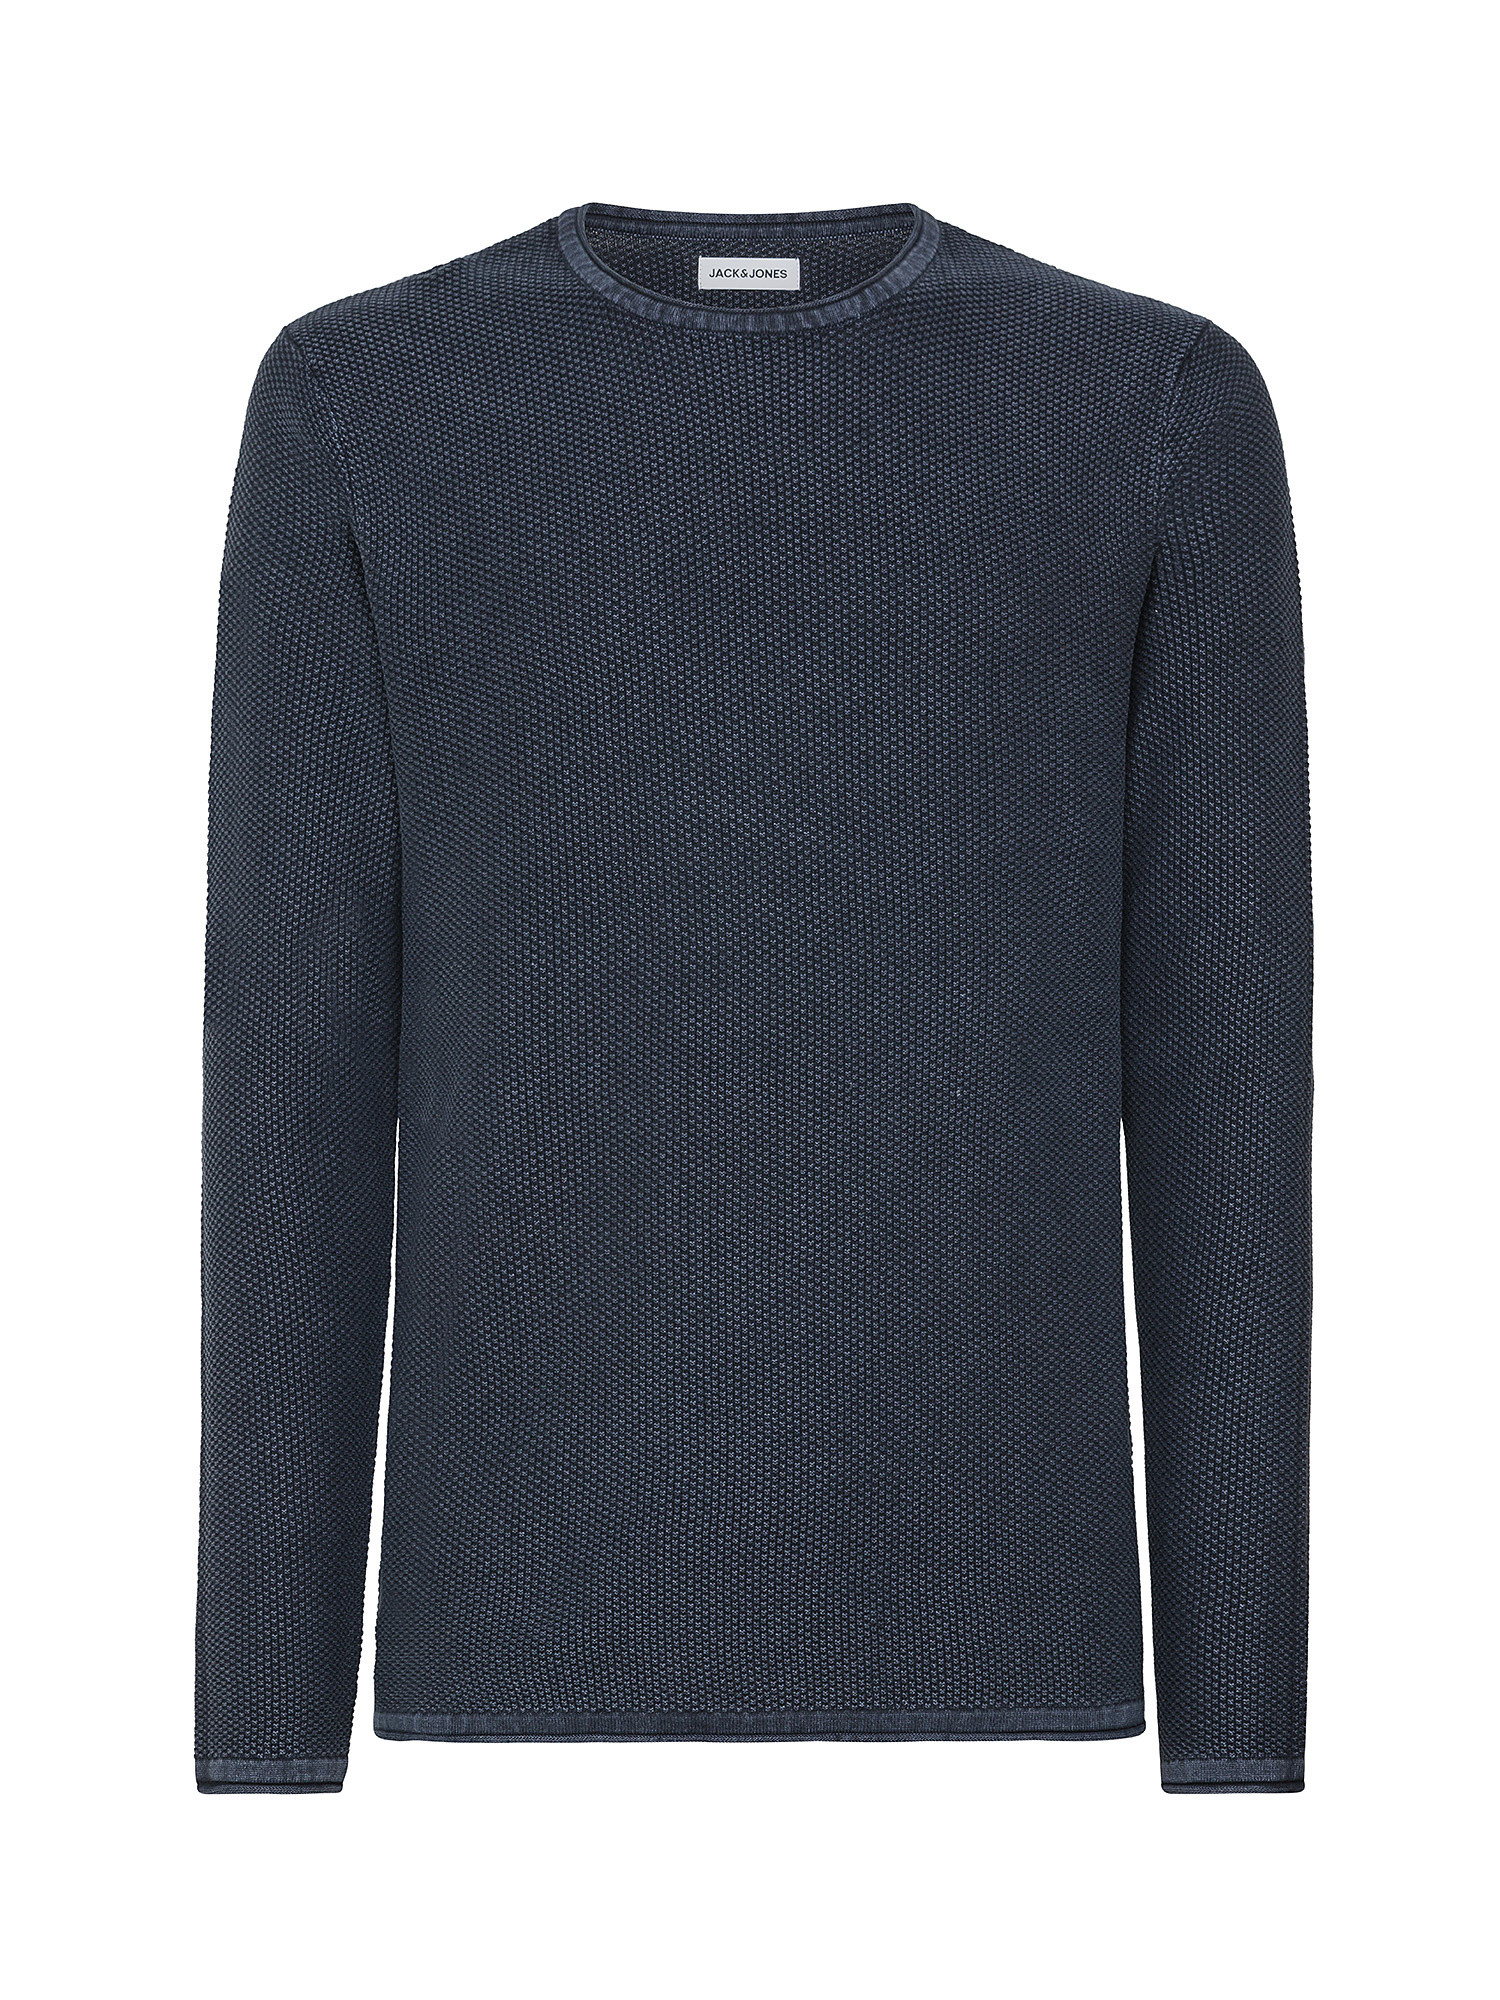 Jack & Jones - Pullover in cotone, Blu scuro, large image number 0